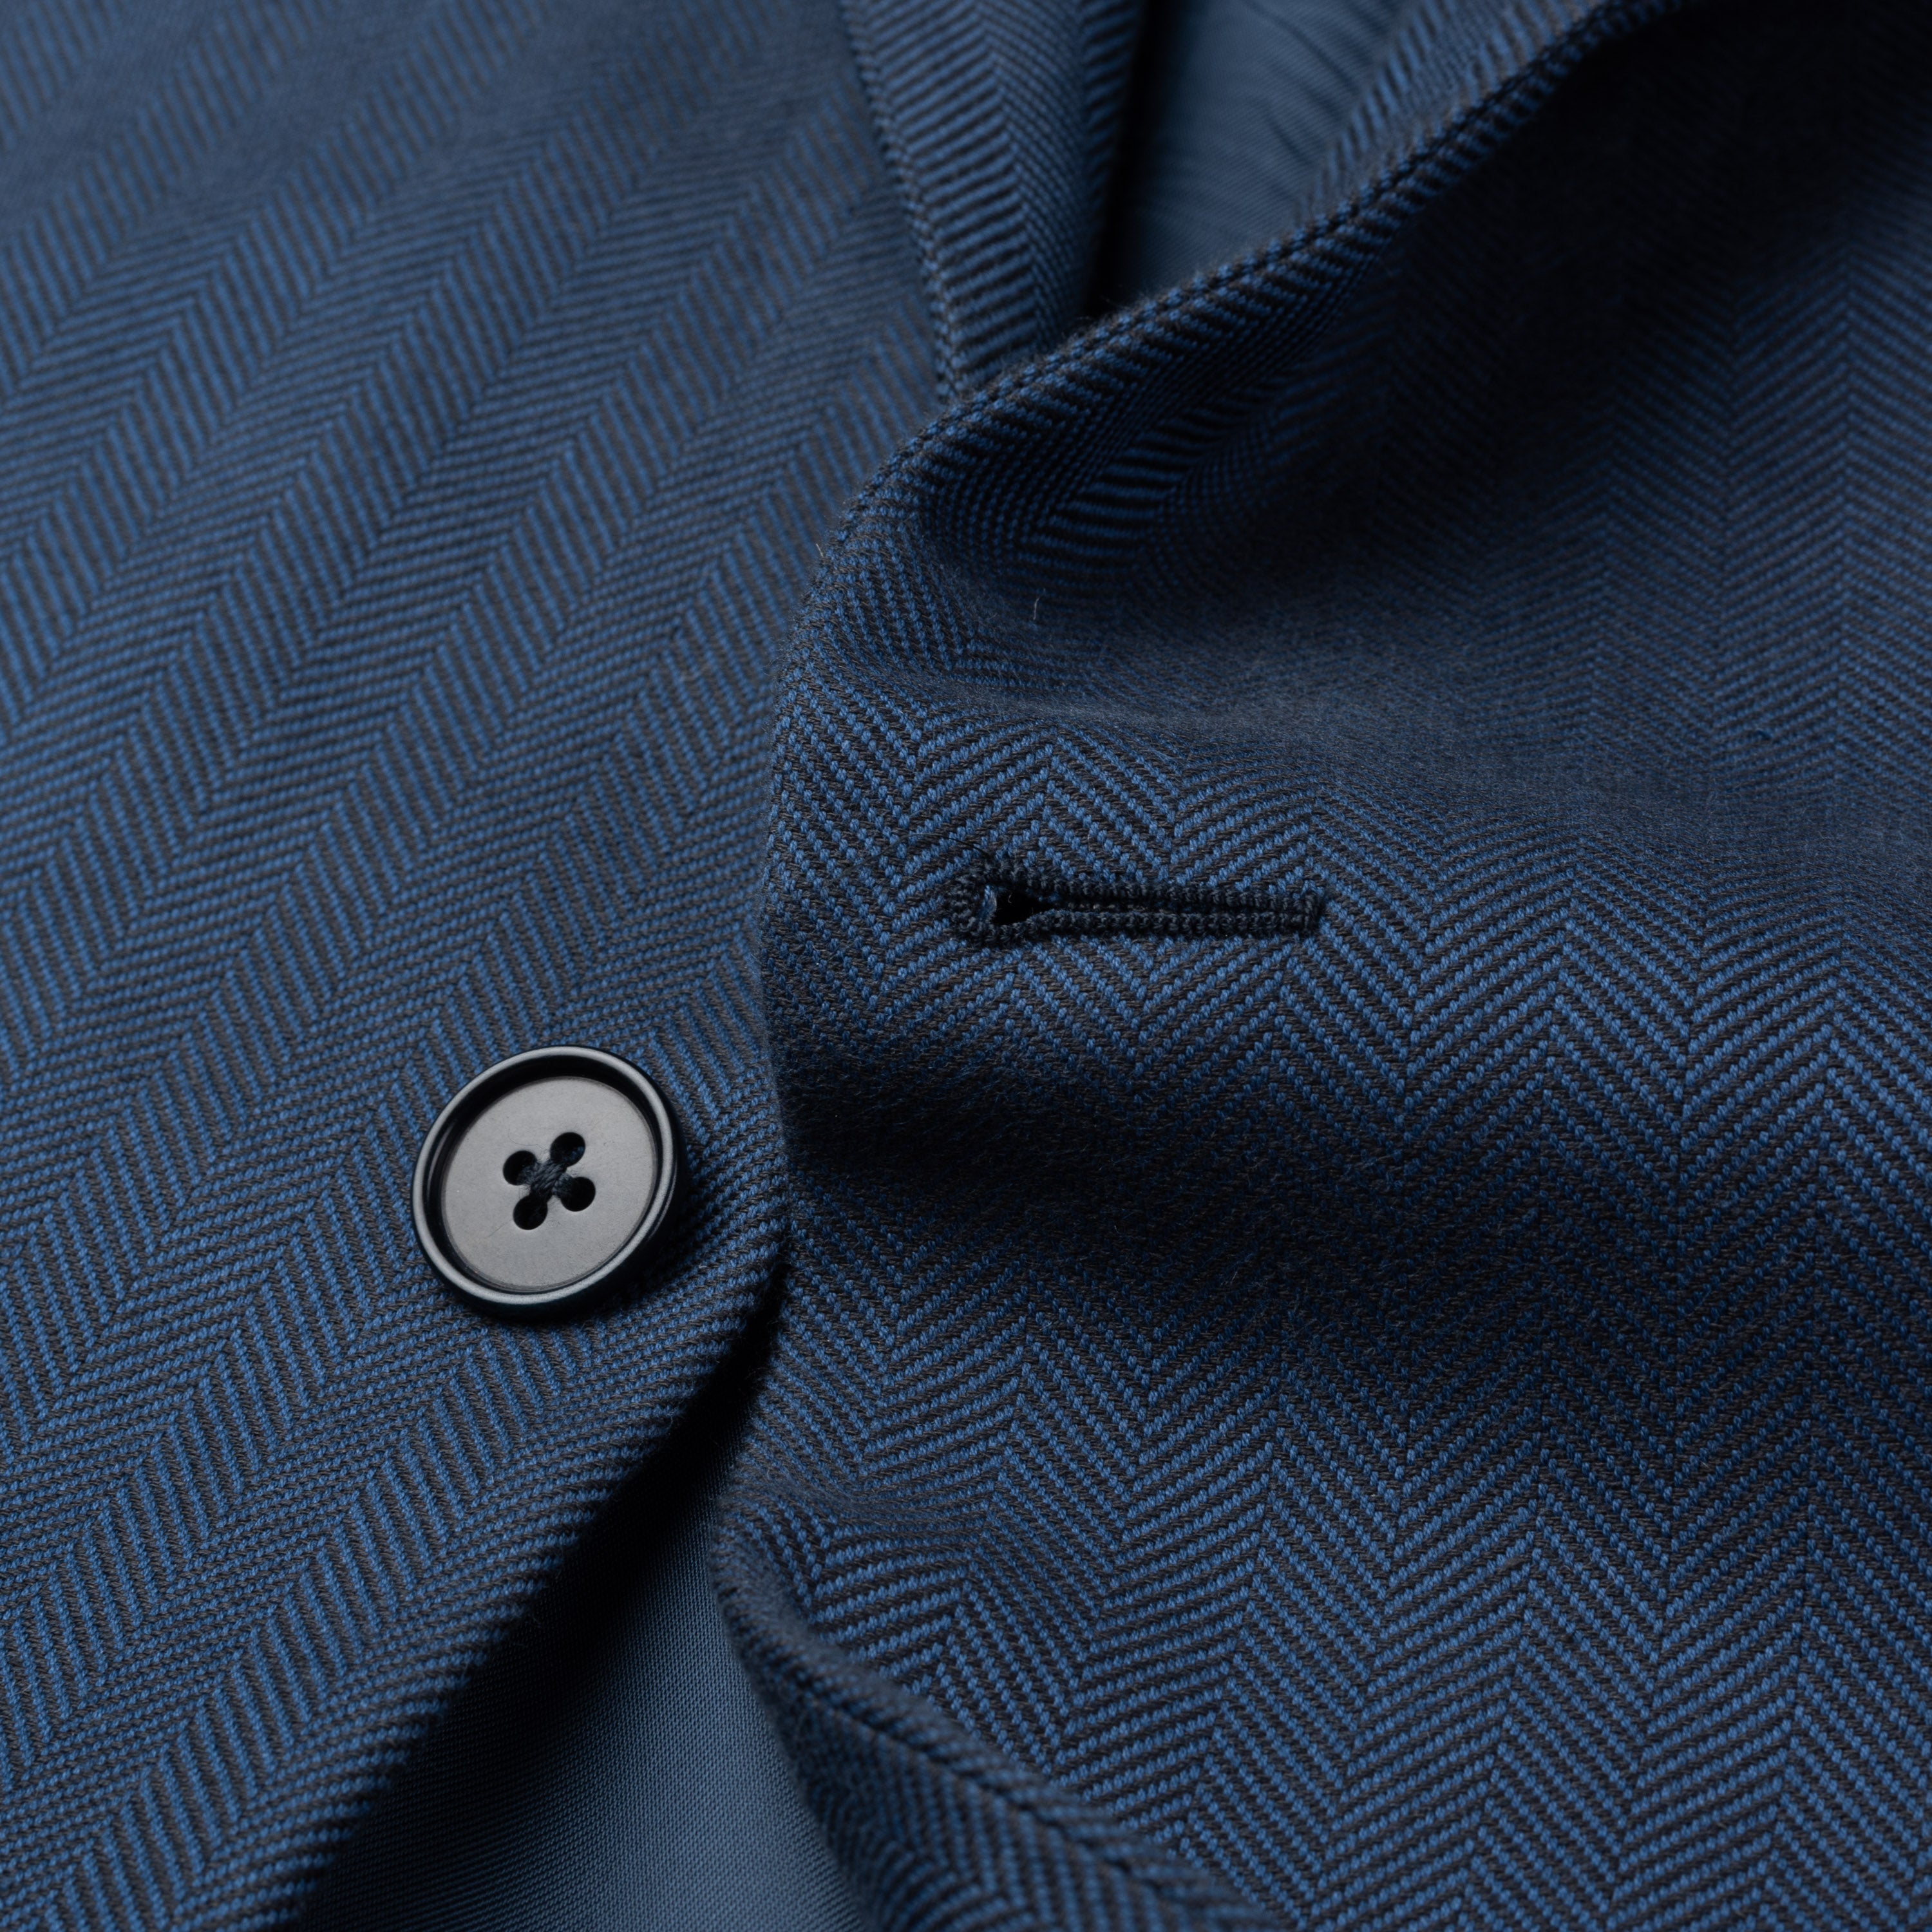 CORSOCHIARO by CASTANGIA Blue Herringbone Cotton Jacket EU 54 NEW US 44